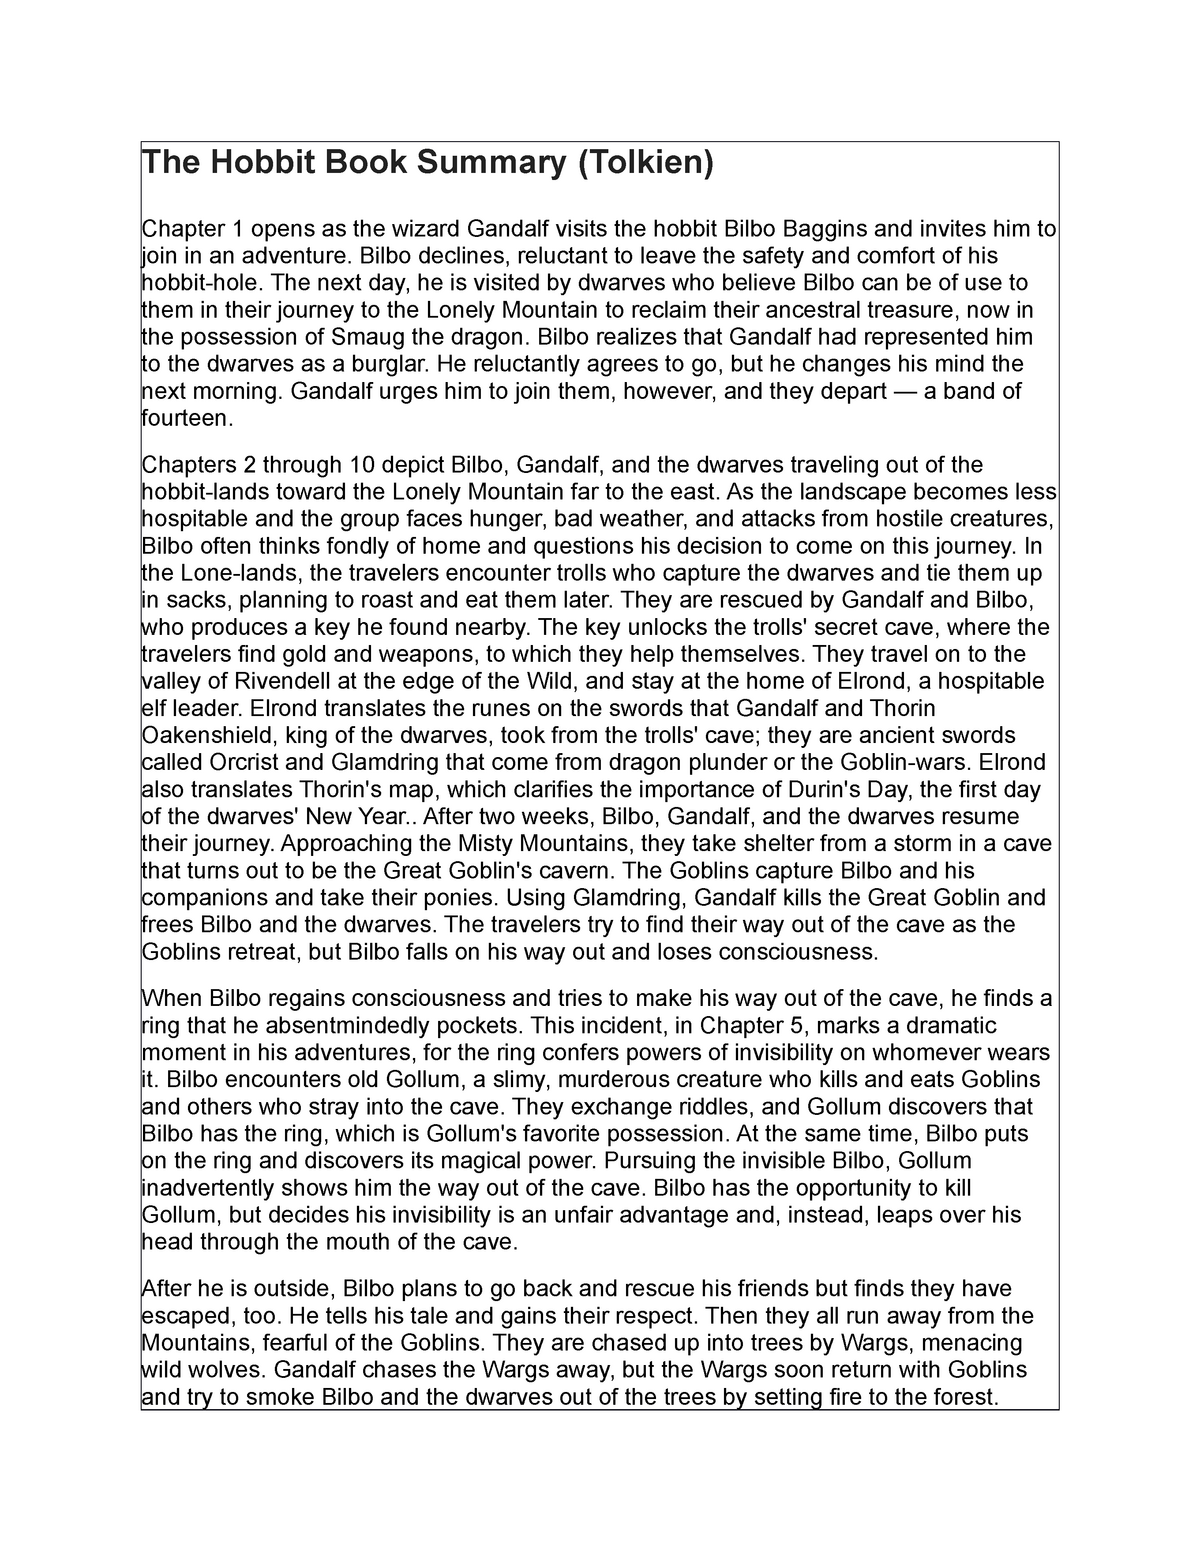 hobbit book review essay